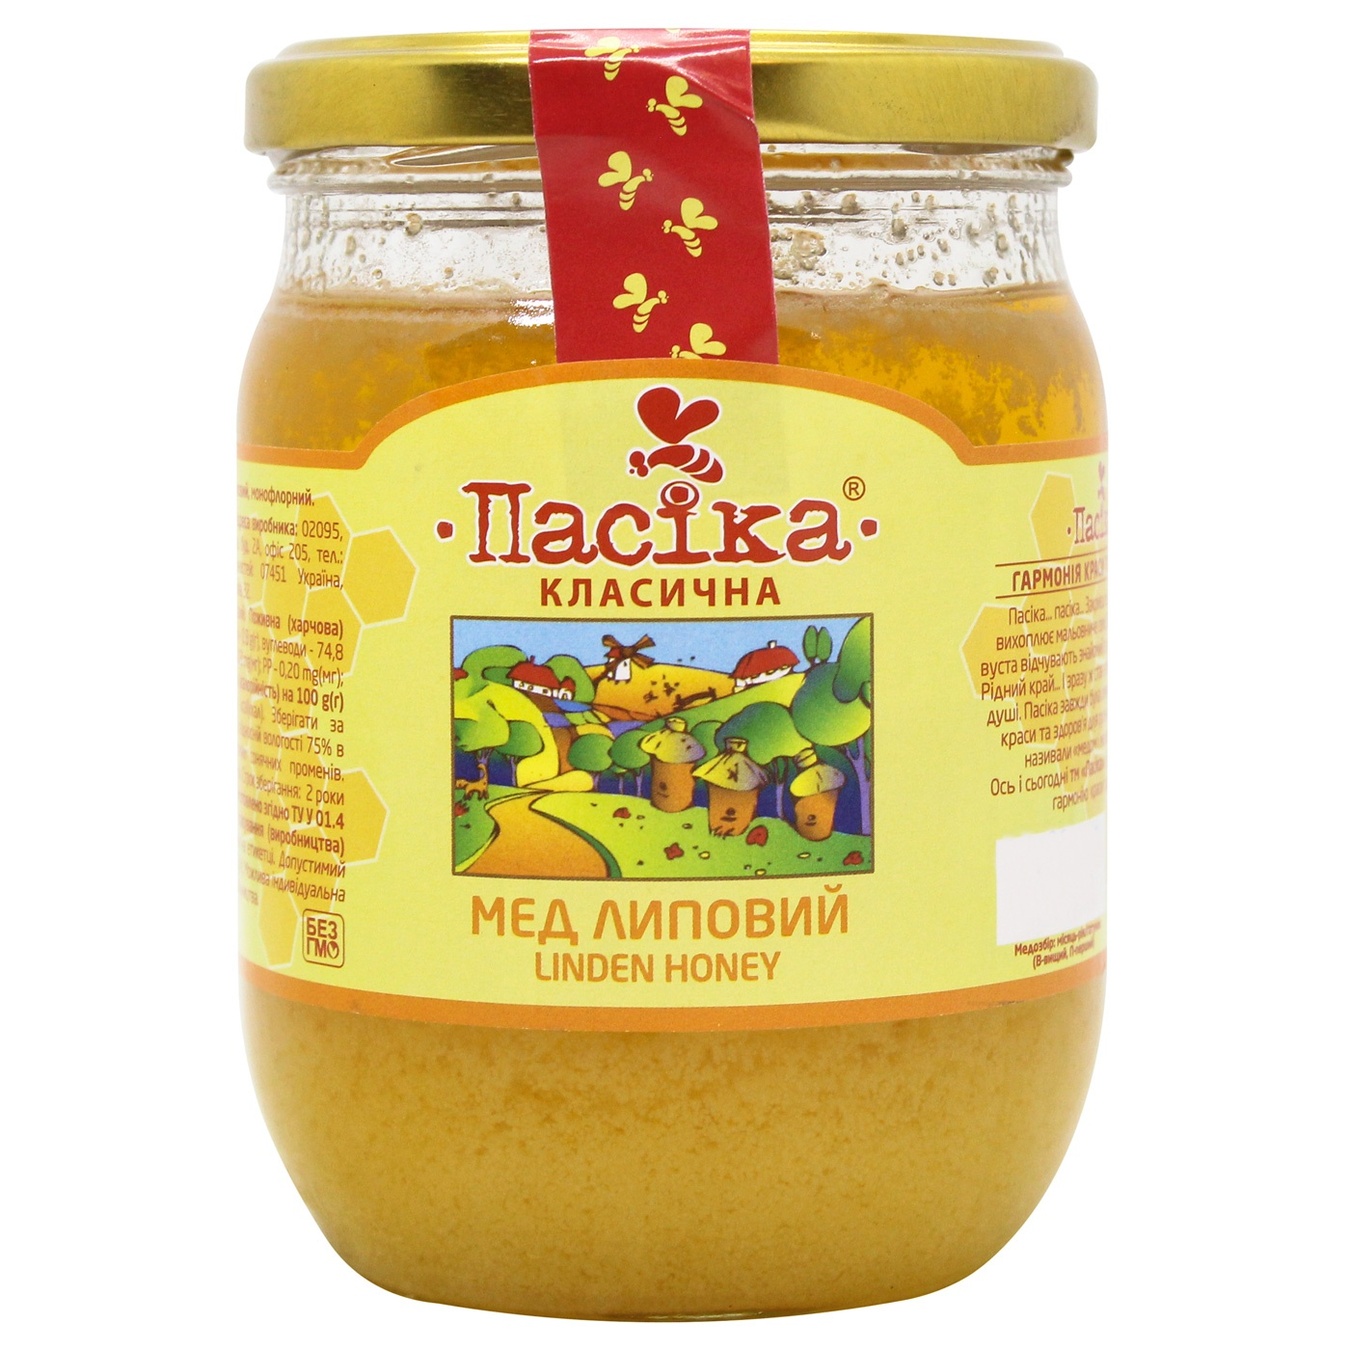 Apisika linden honey natural glass jar 650g ᐈ Buy at a good price from ...